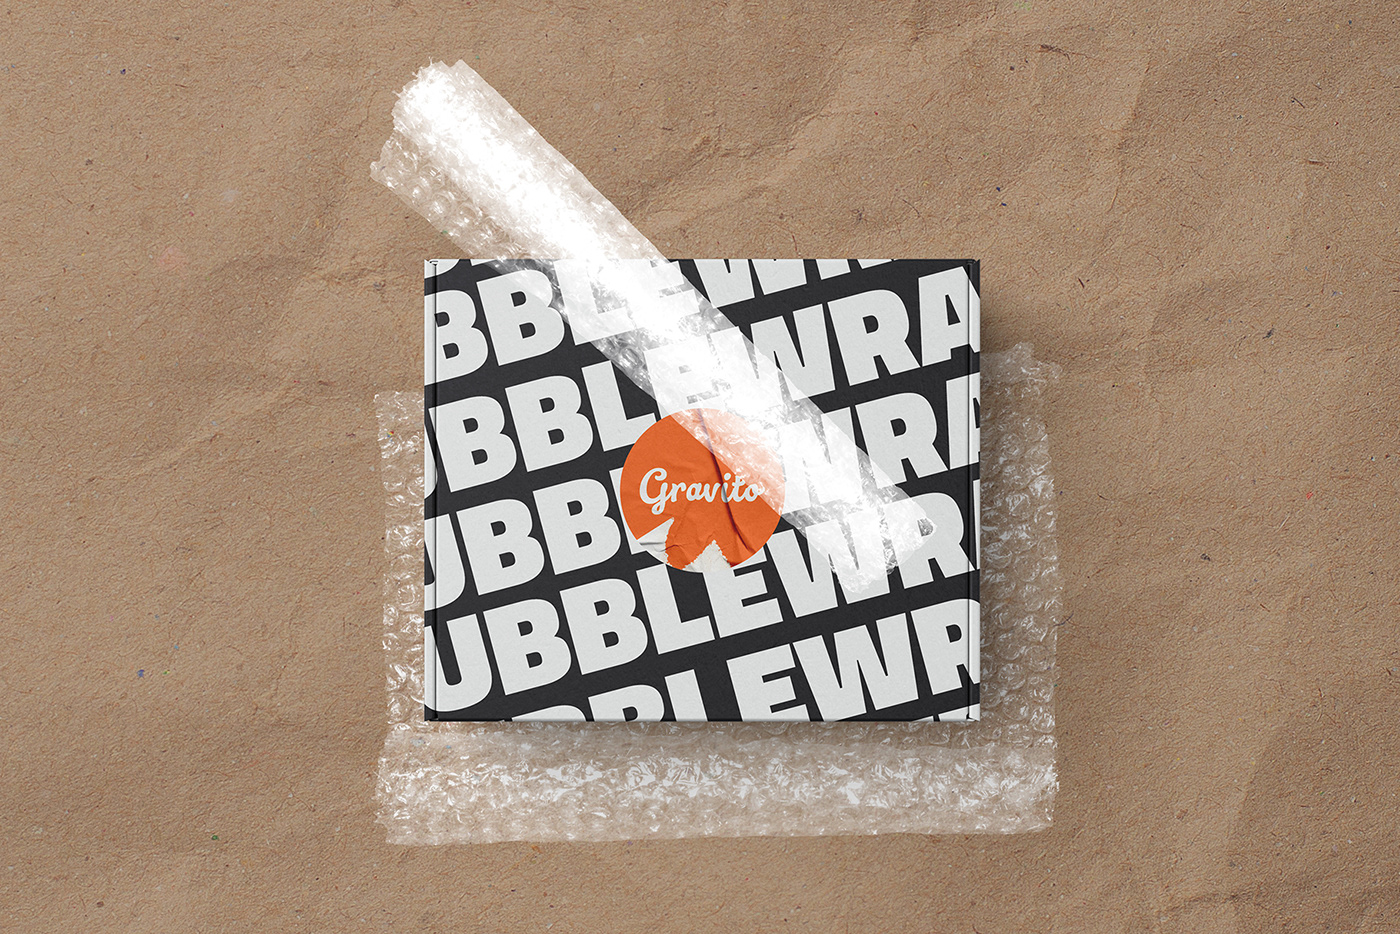 Bubble Wrap texture plastic Packaging Graphic Designer background plastic mockup png transparent free wrap